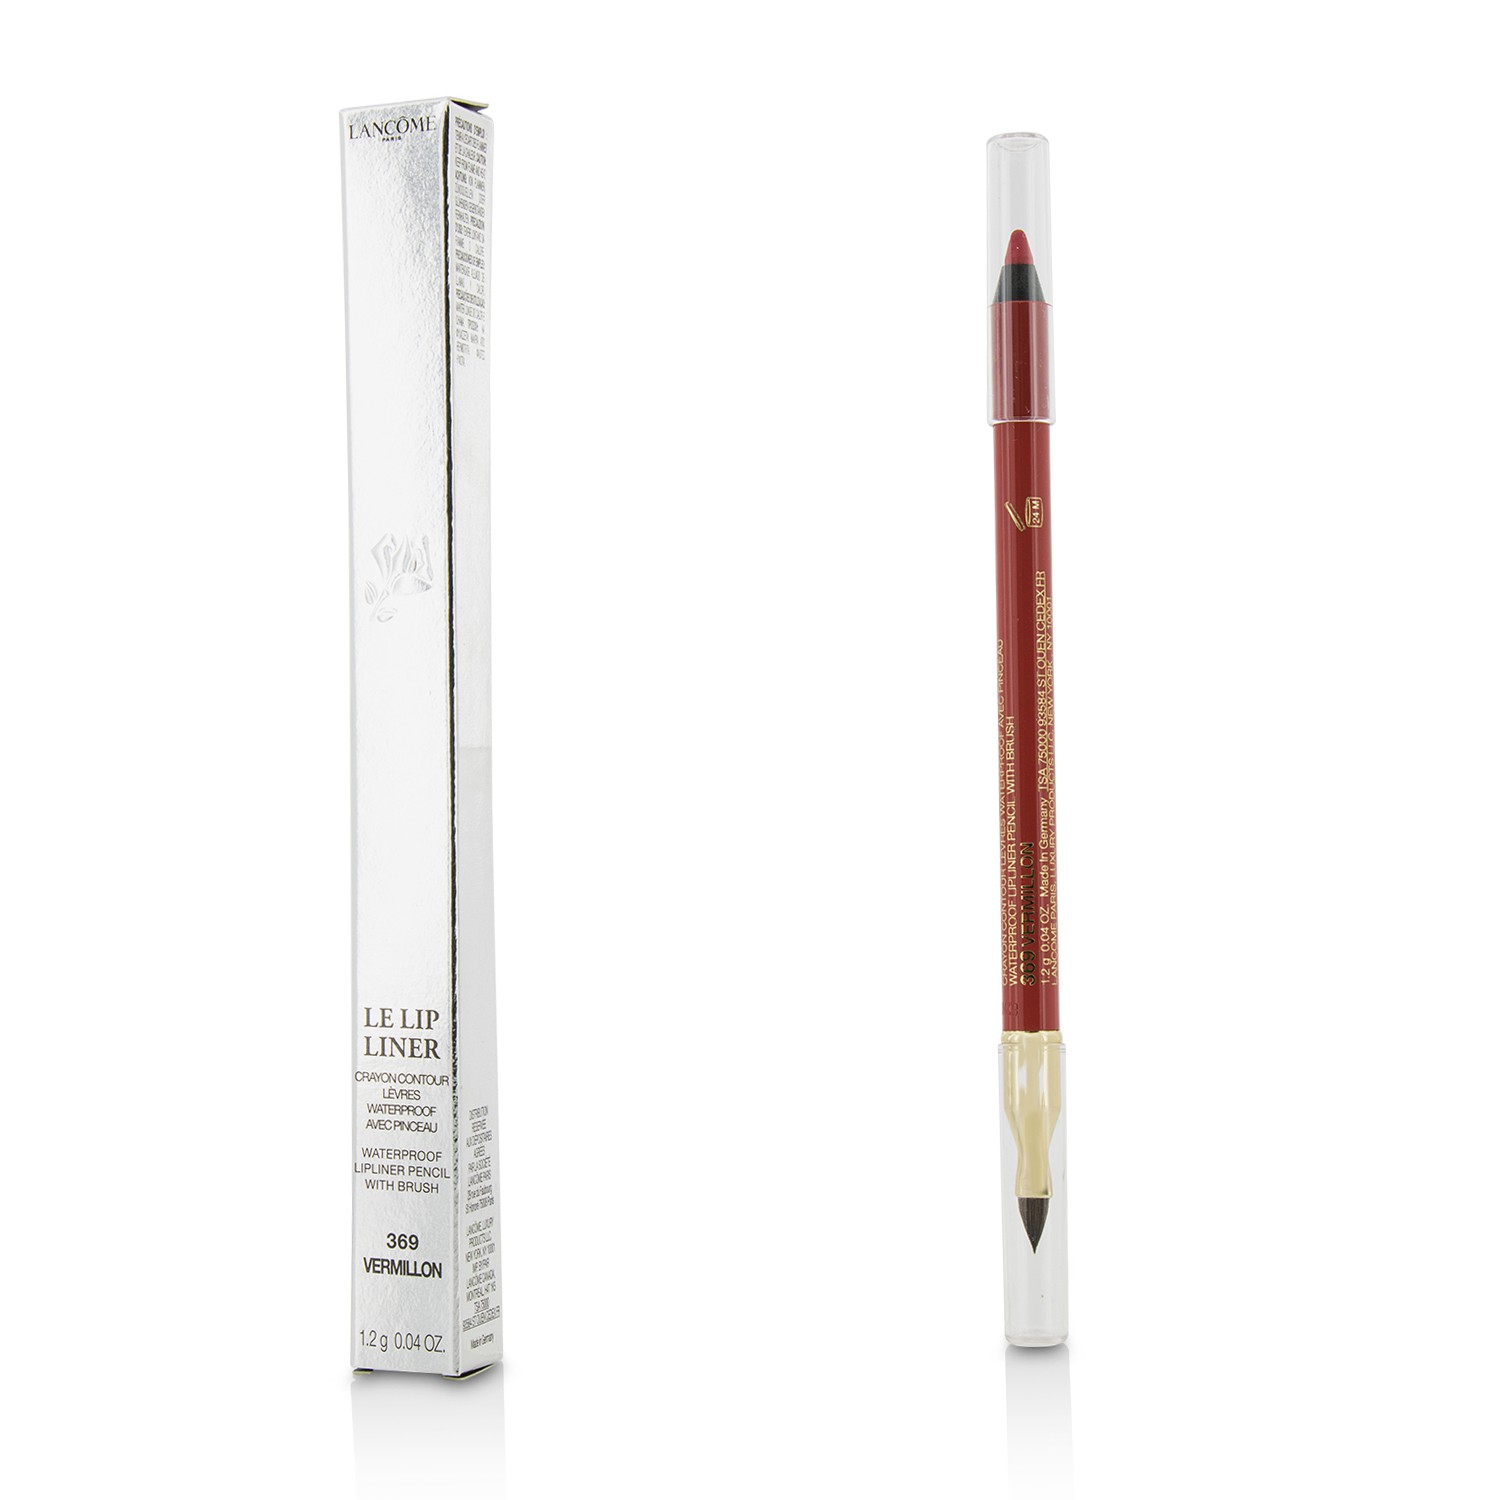 Le Lip Liner Waterproof Lip Pencil With Brush - #369 Vermillon Lancome Image